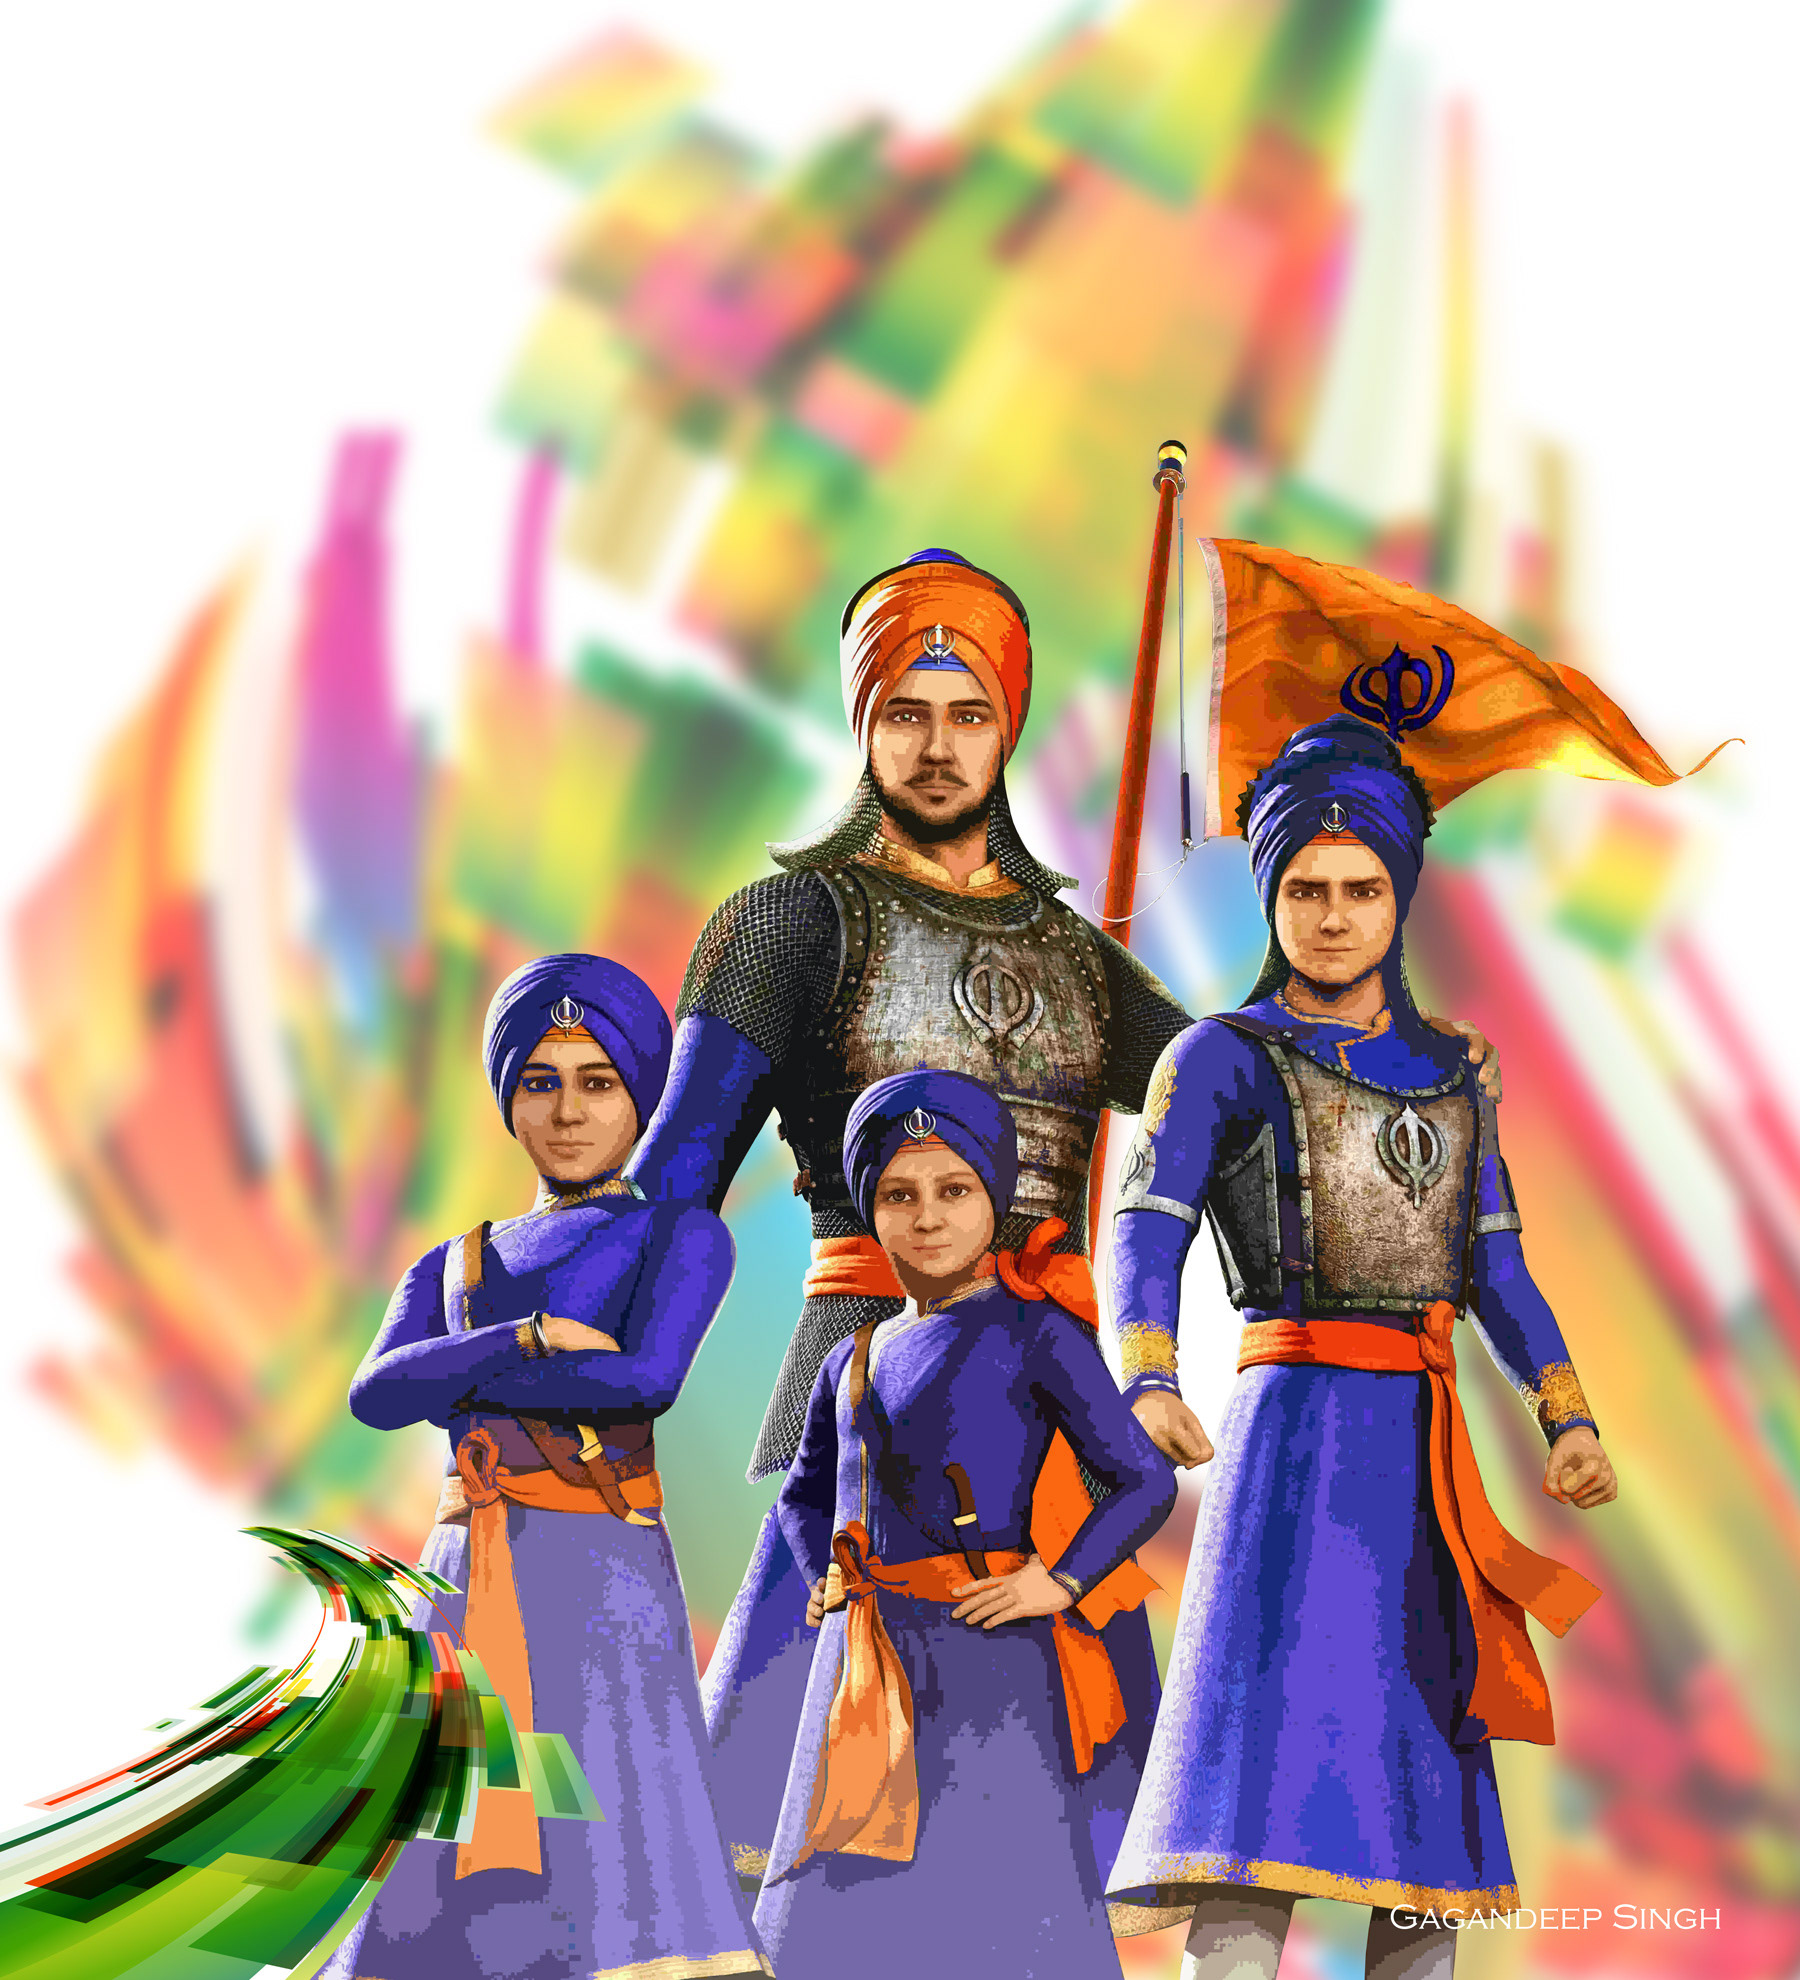 Sikh and Punjabi